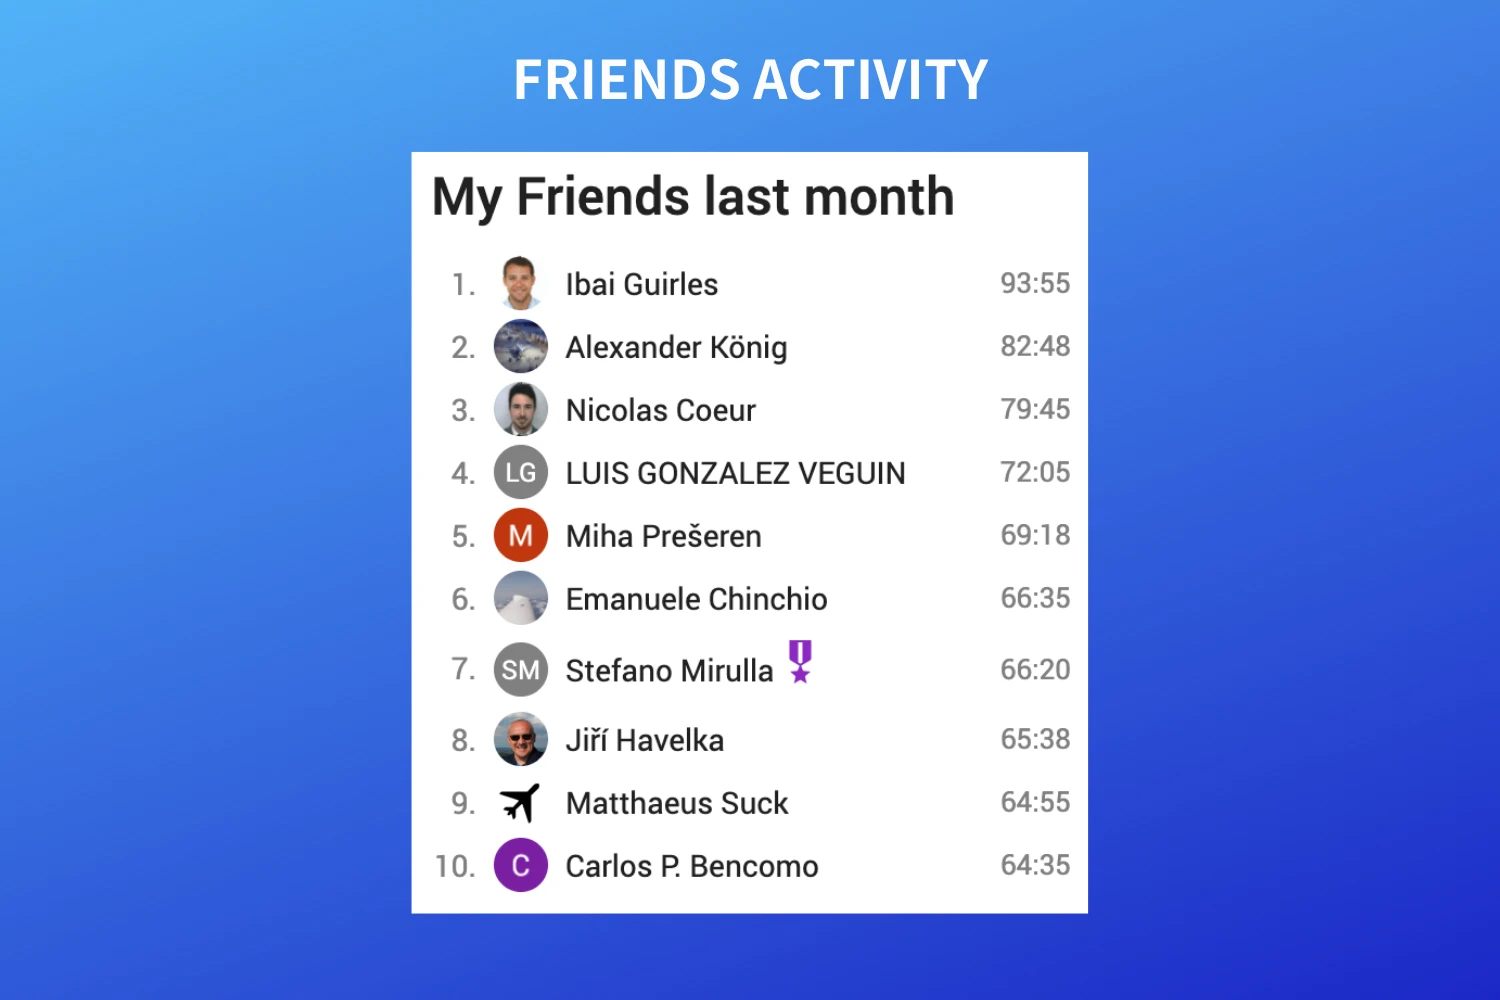 Friends activity